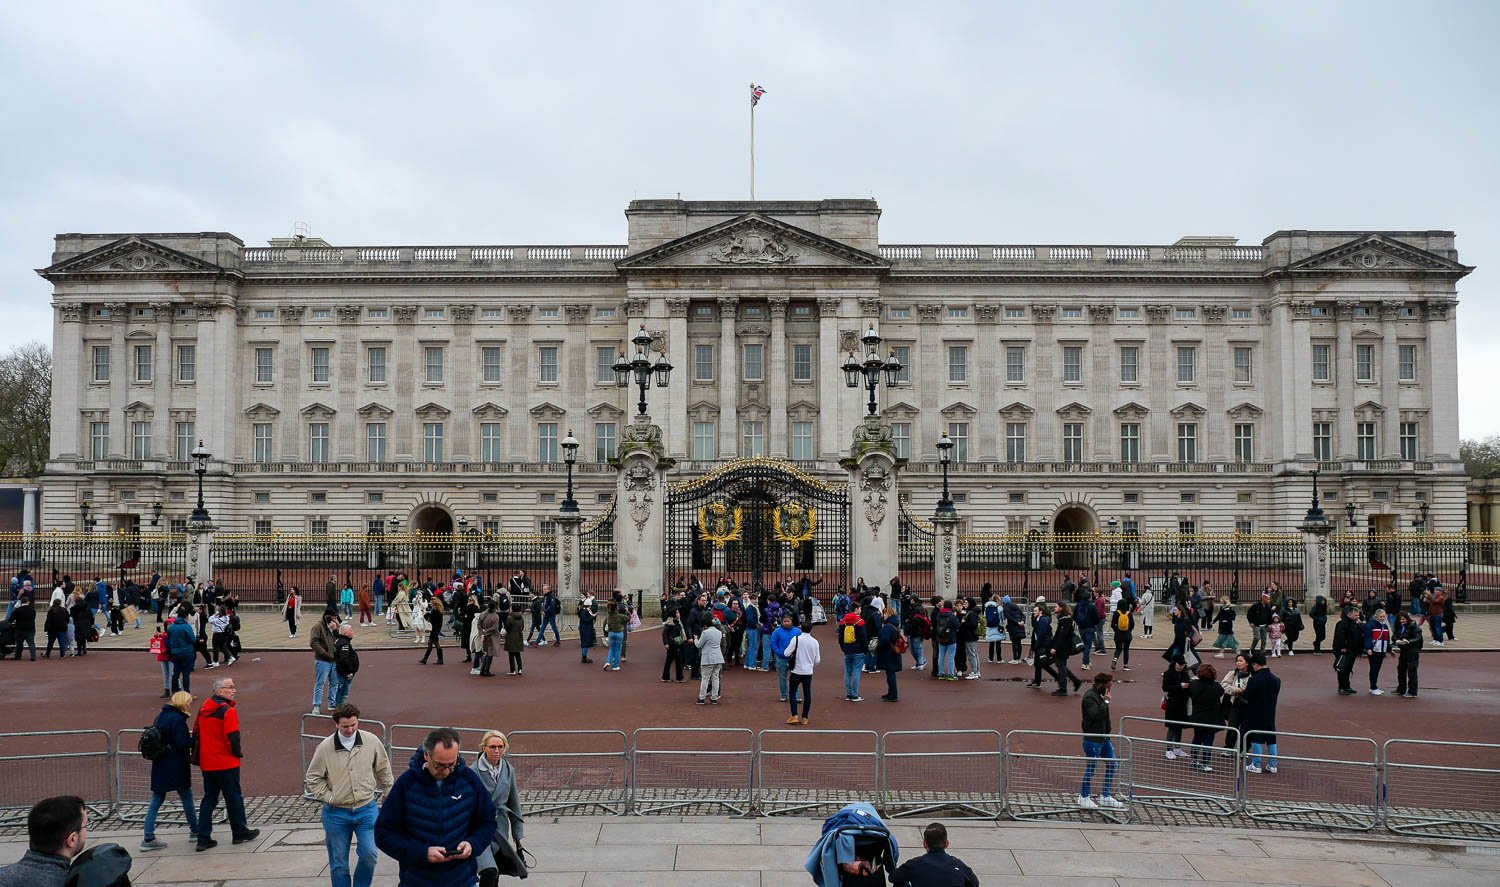 Buckingham Palace visiter Londres en 2 jours Angleterre